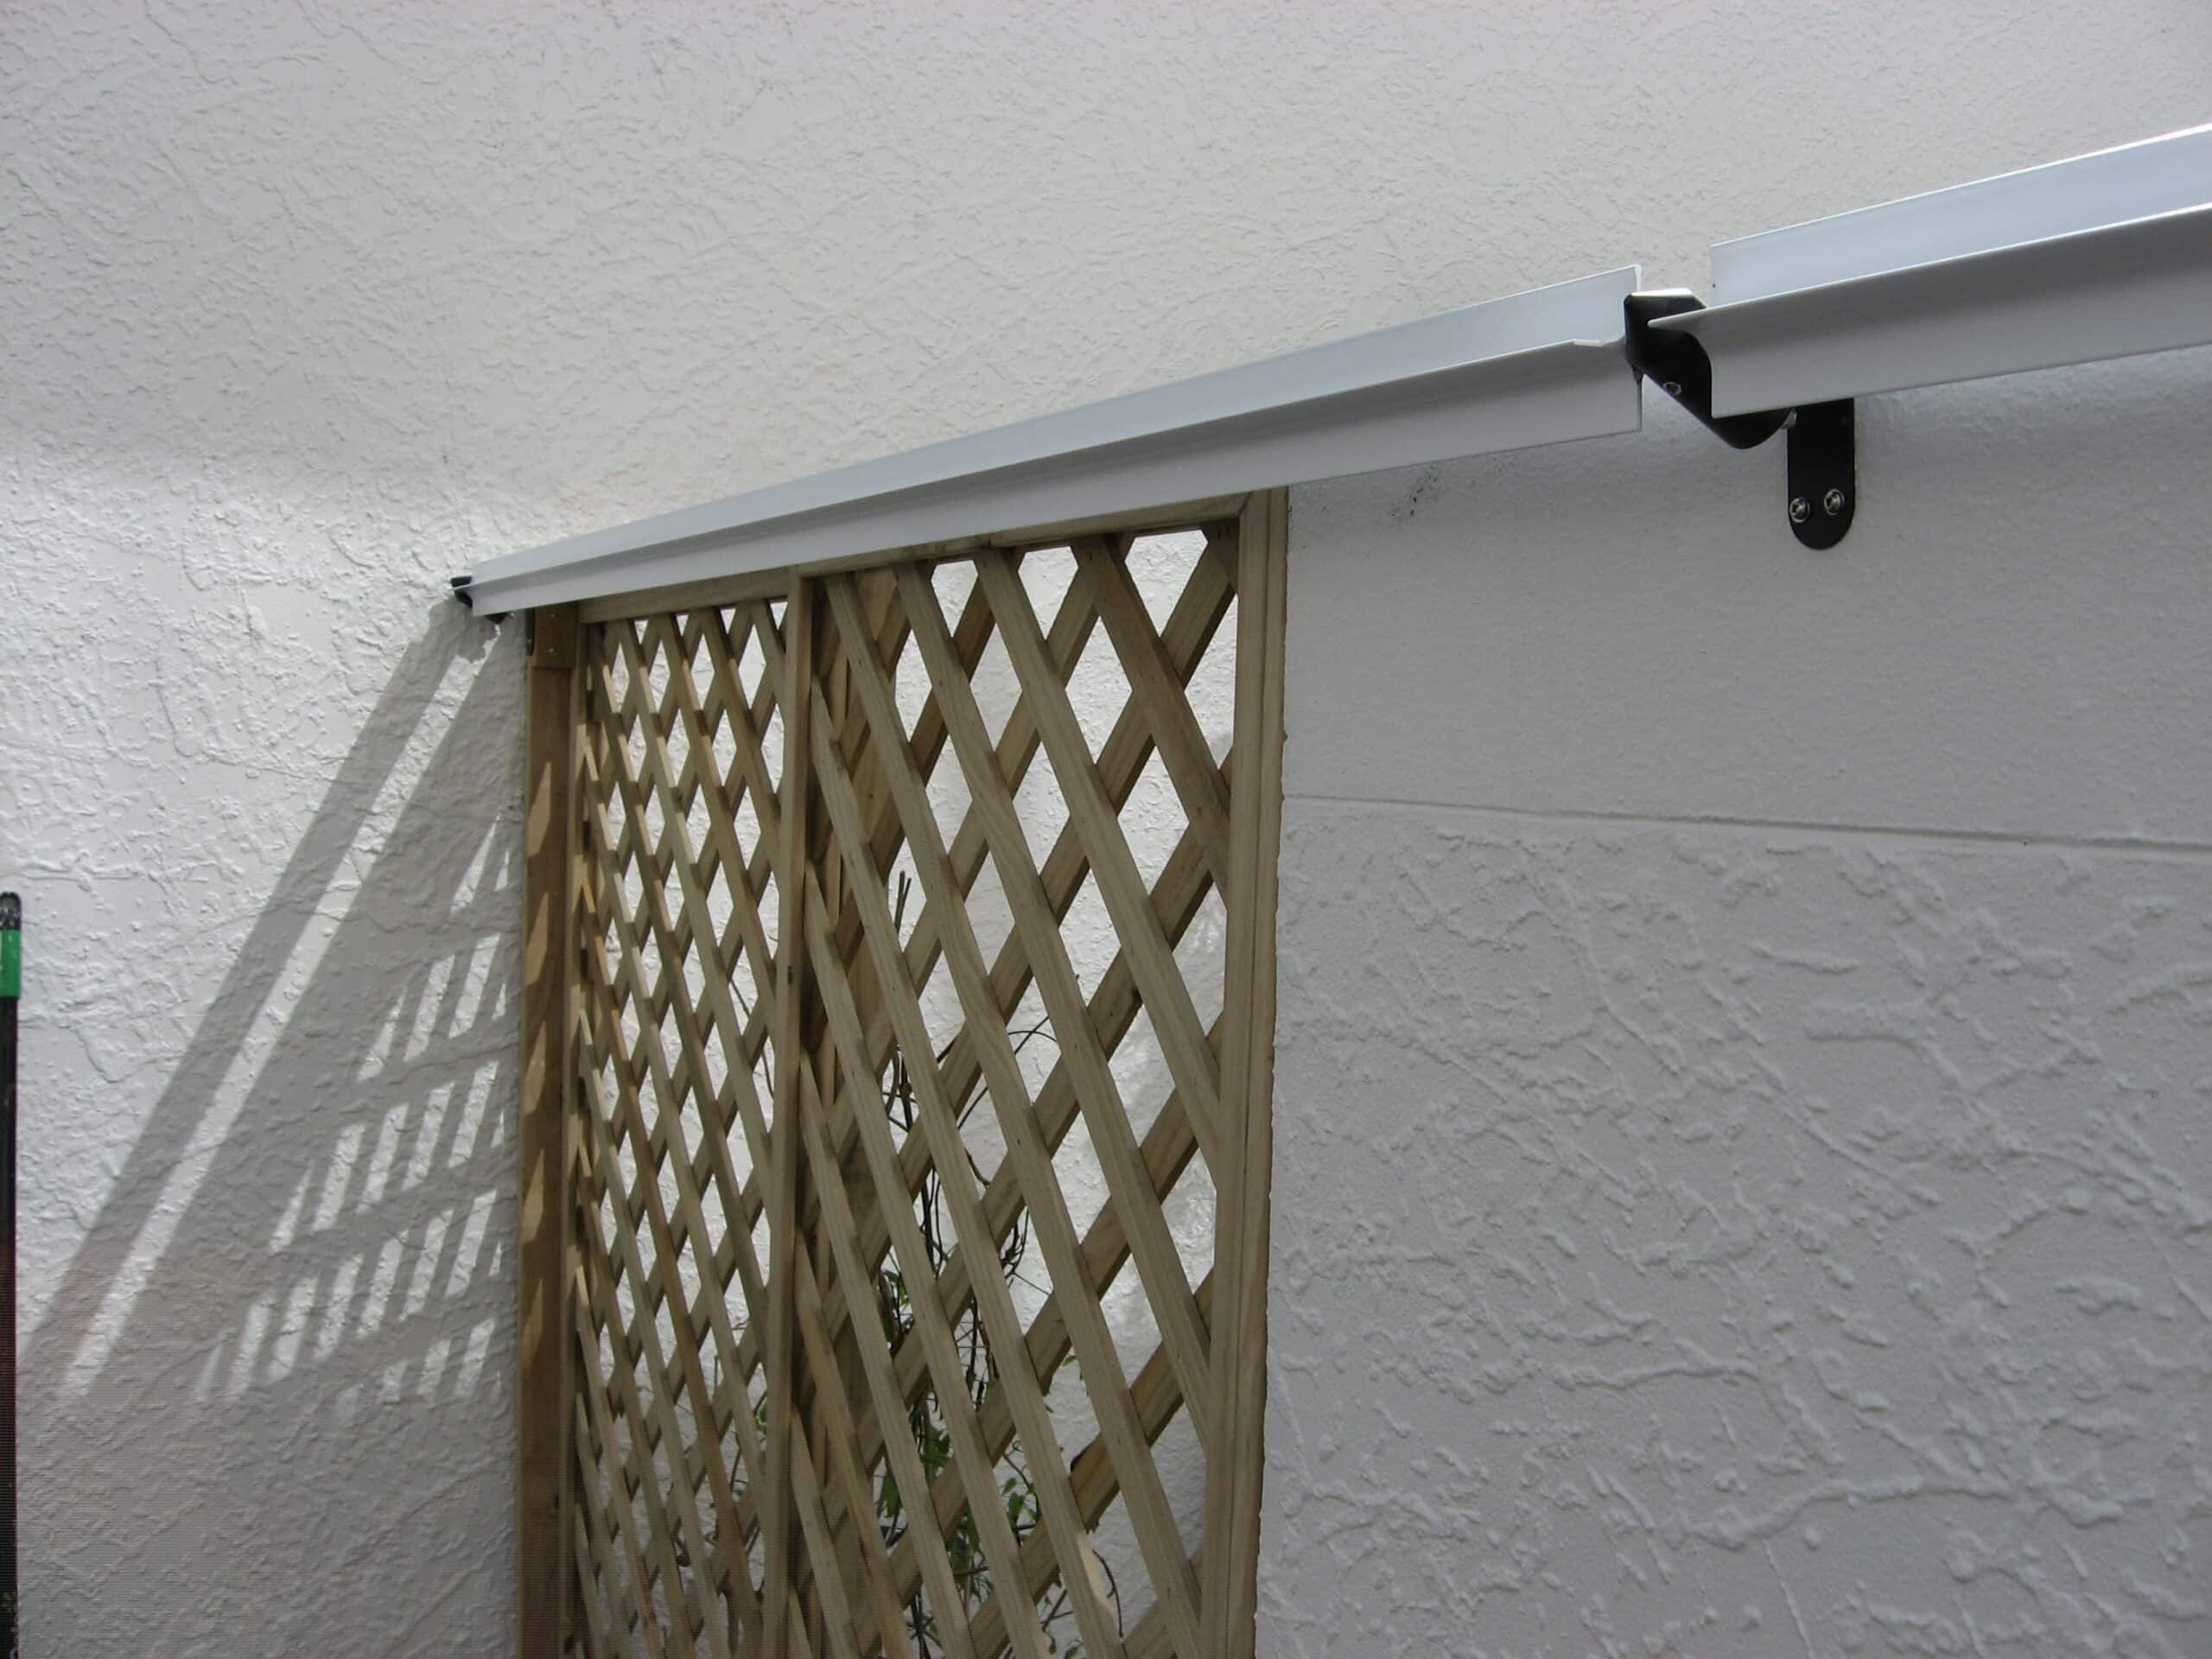 Oscillot cat fence system bracket mounted on masonry wall